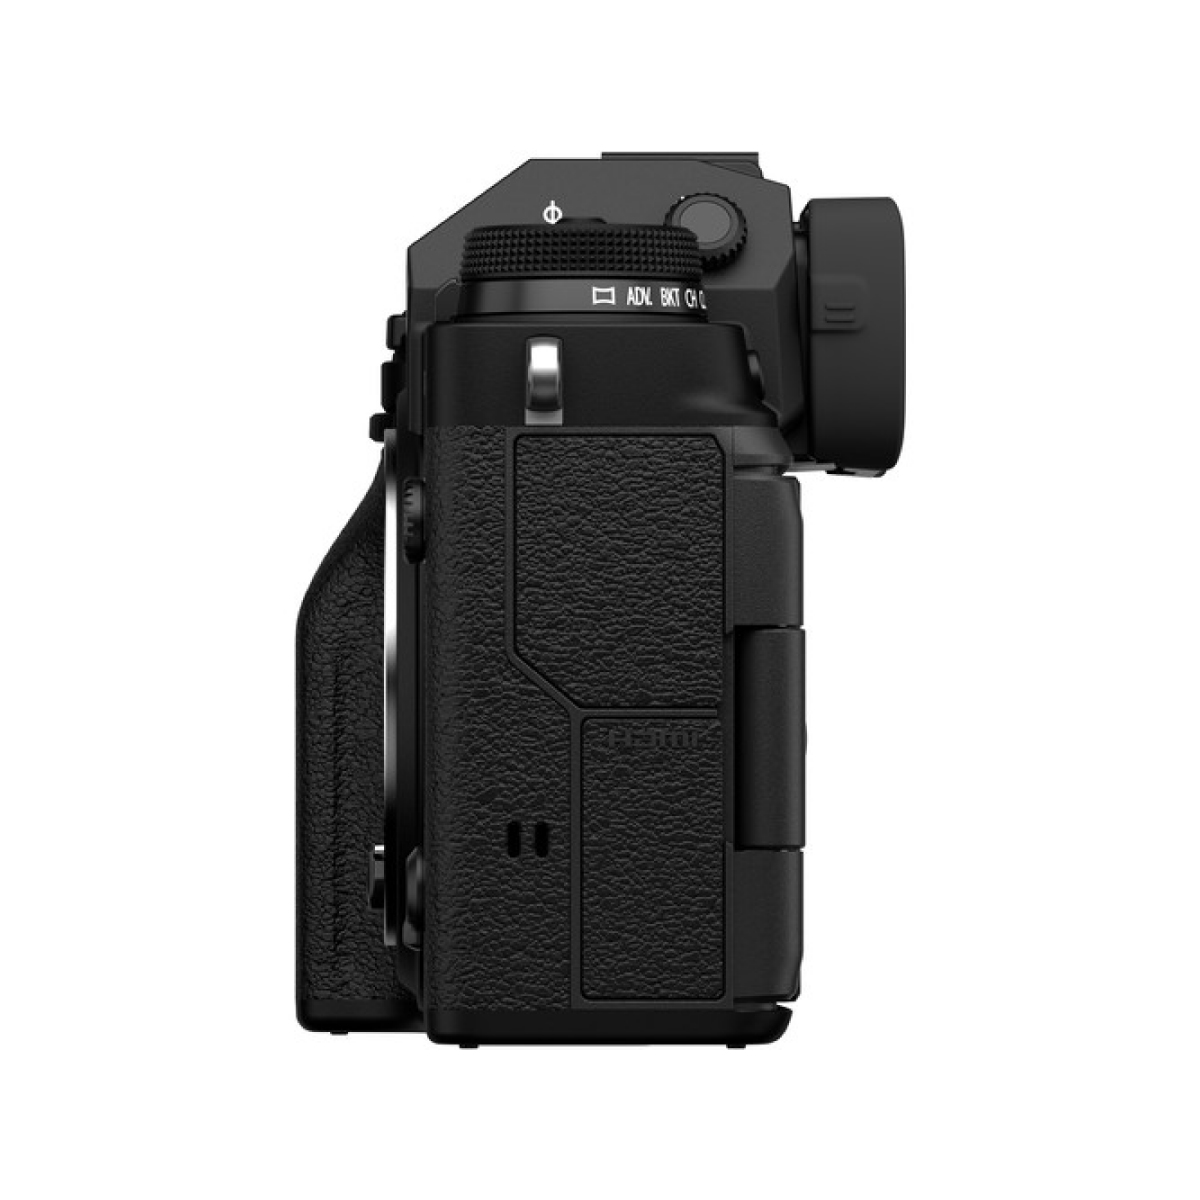 Fujifilm X-T4 26MP Mirrorless Camera Body with XF18-55mm Lens – Black (12)